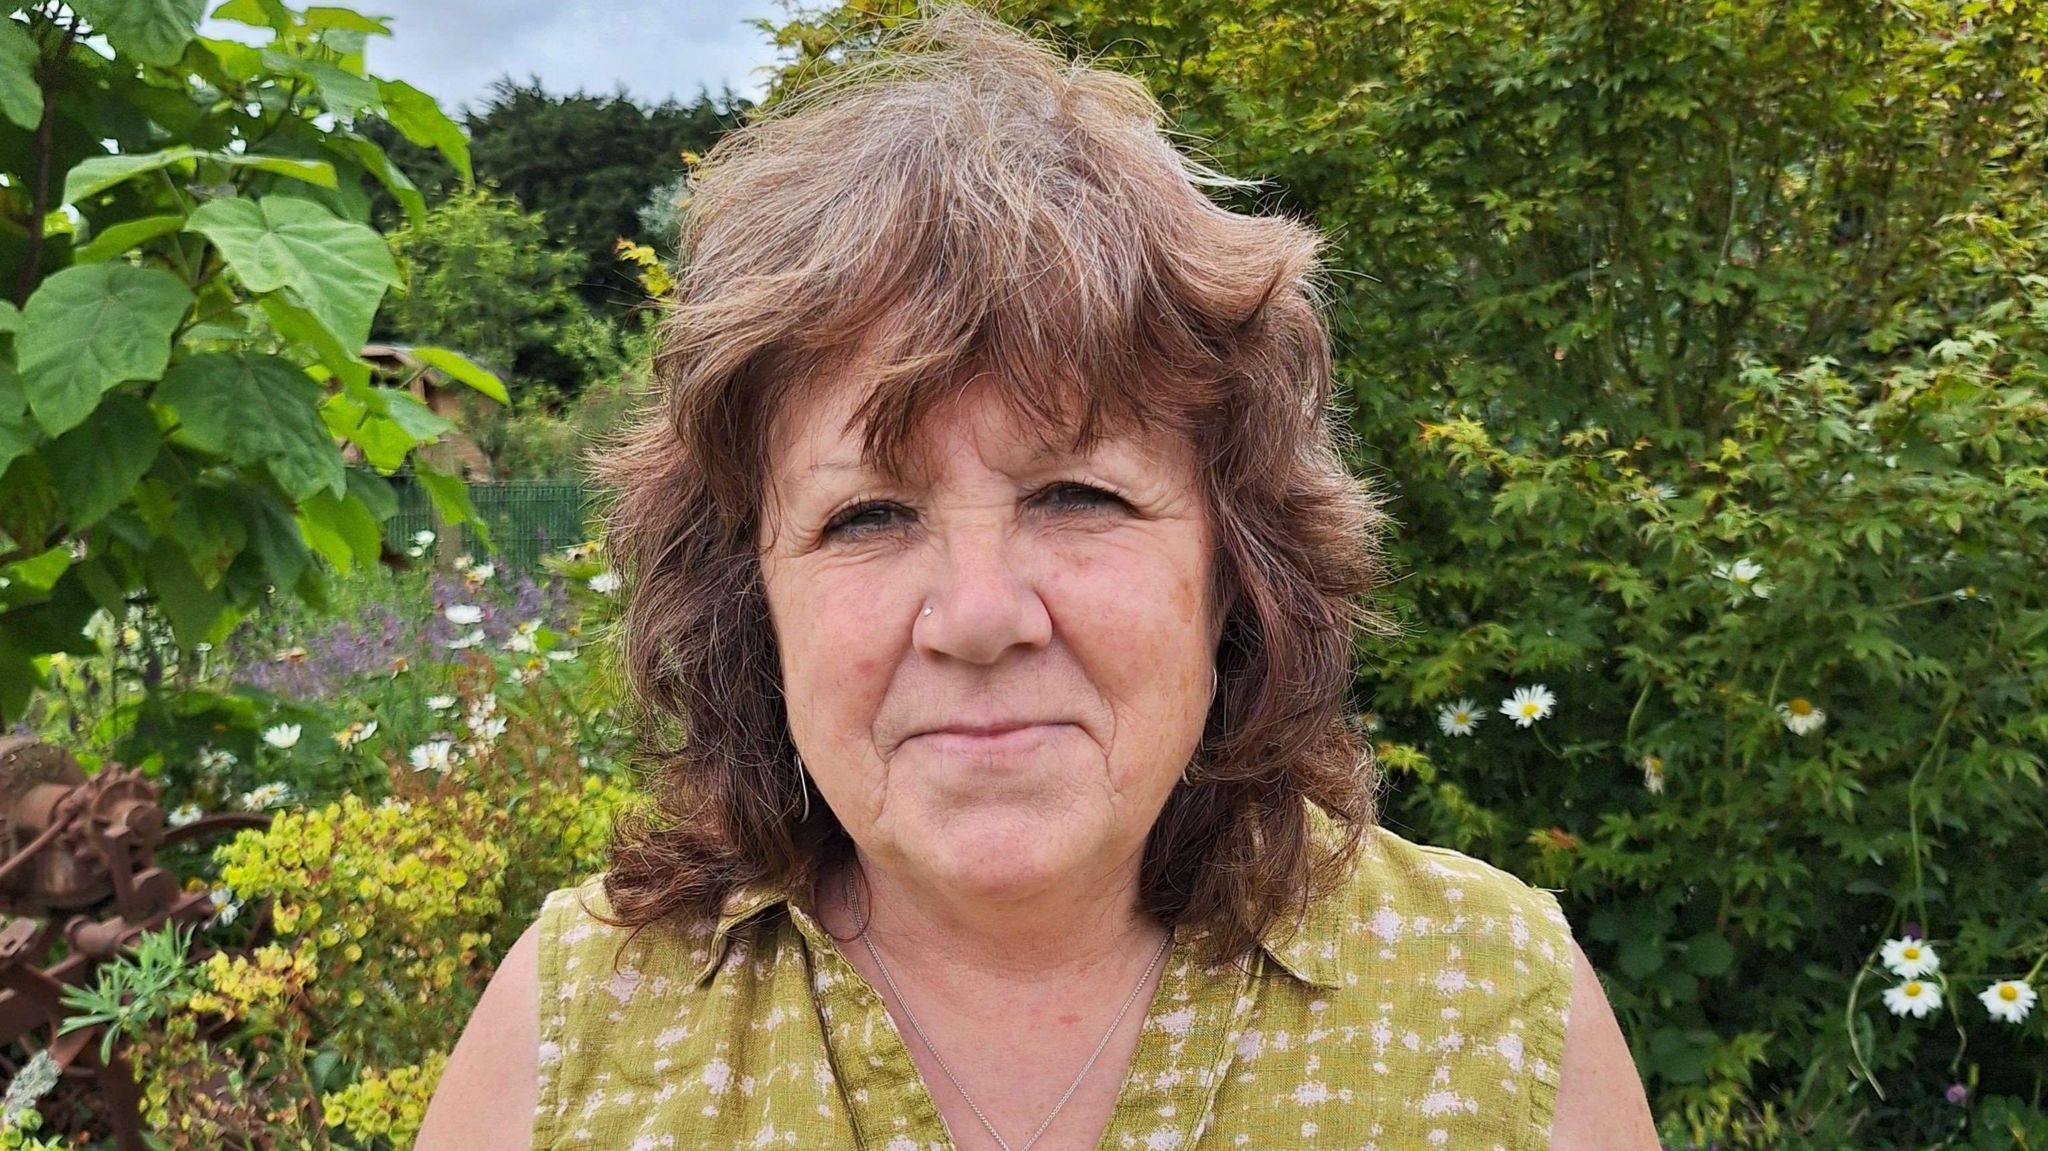 Sherry Morrison stood in a garden